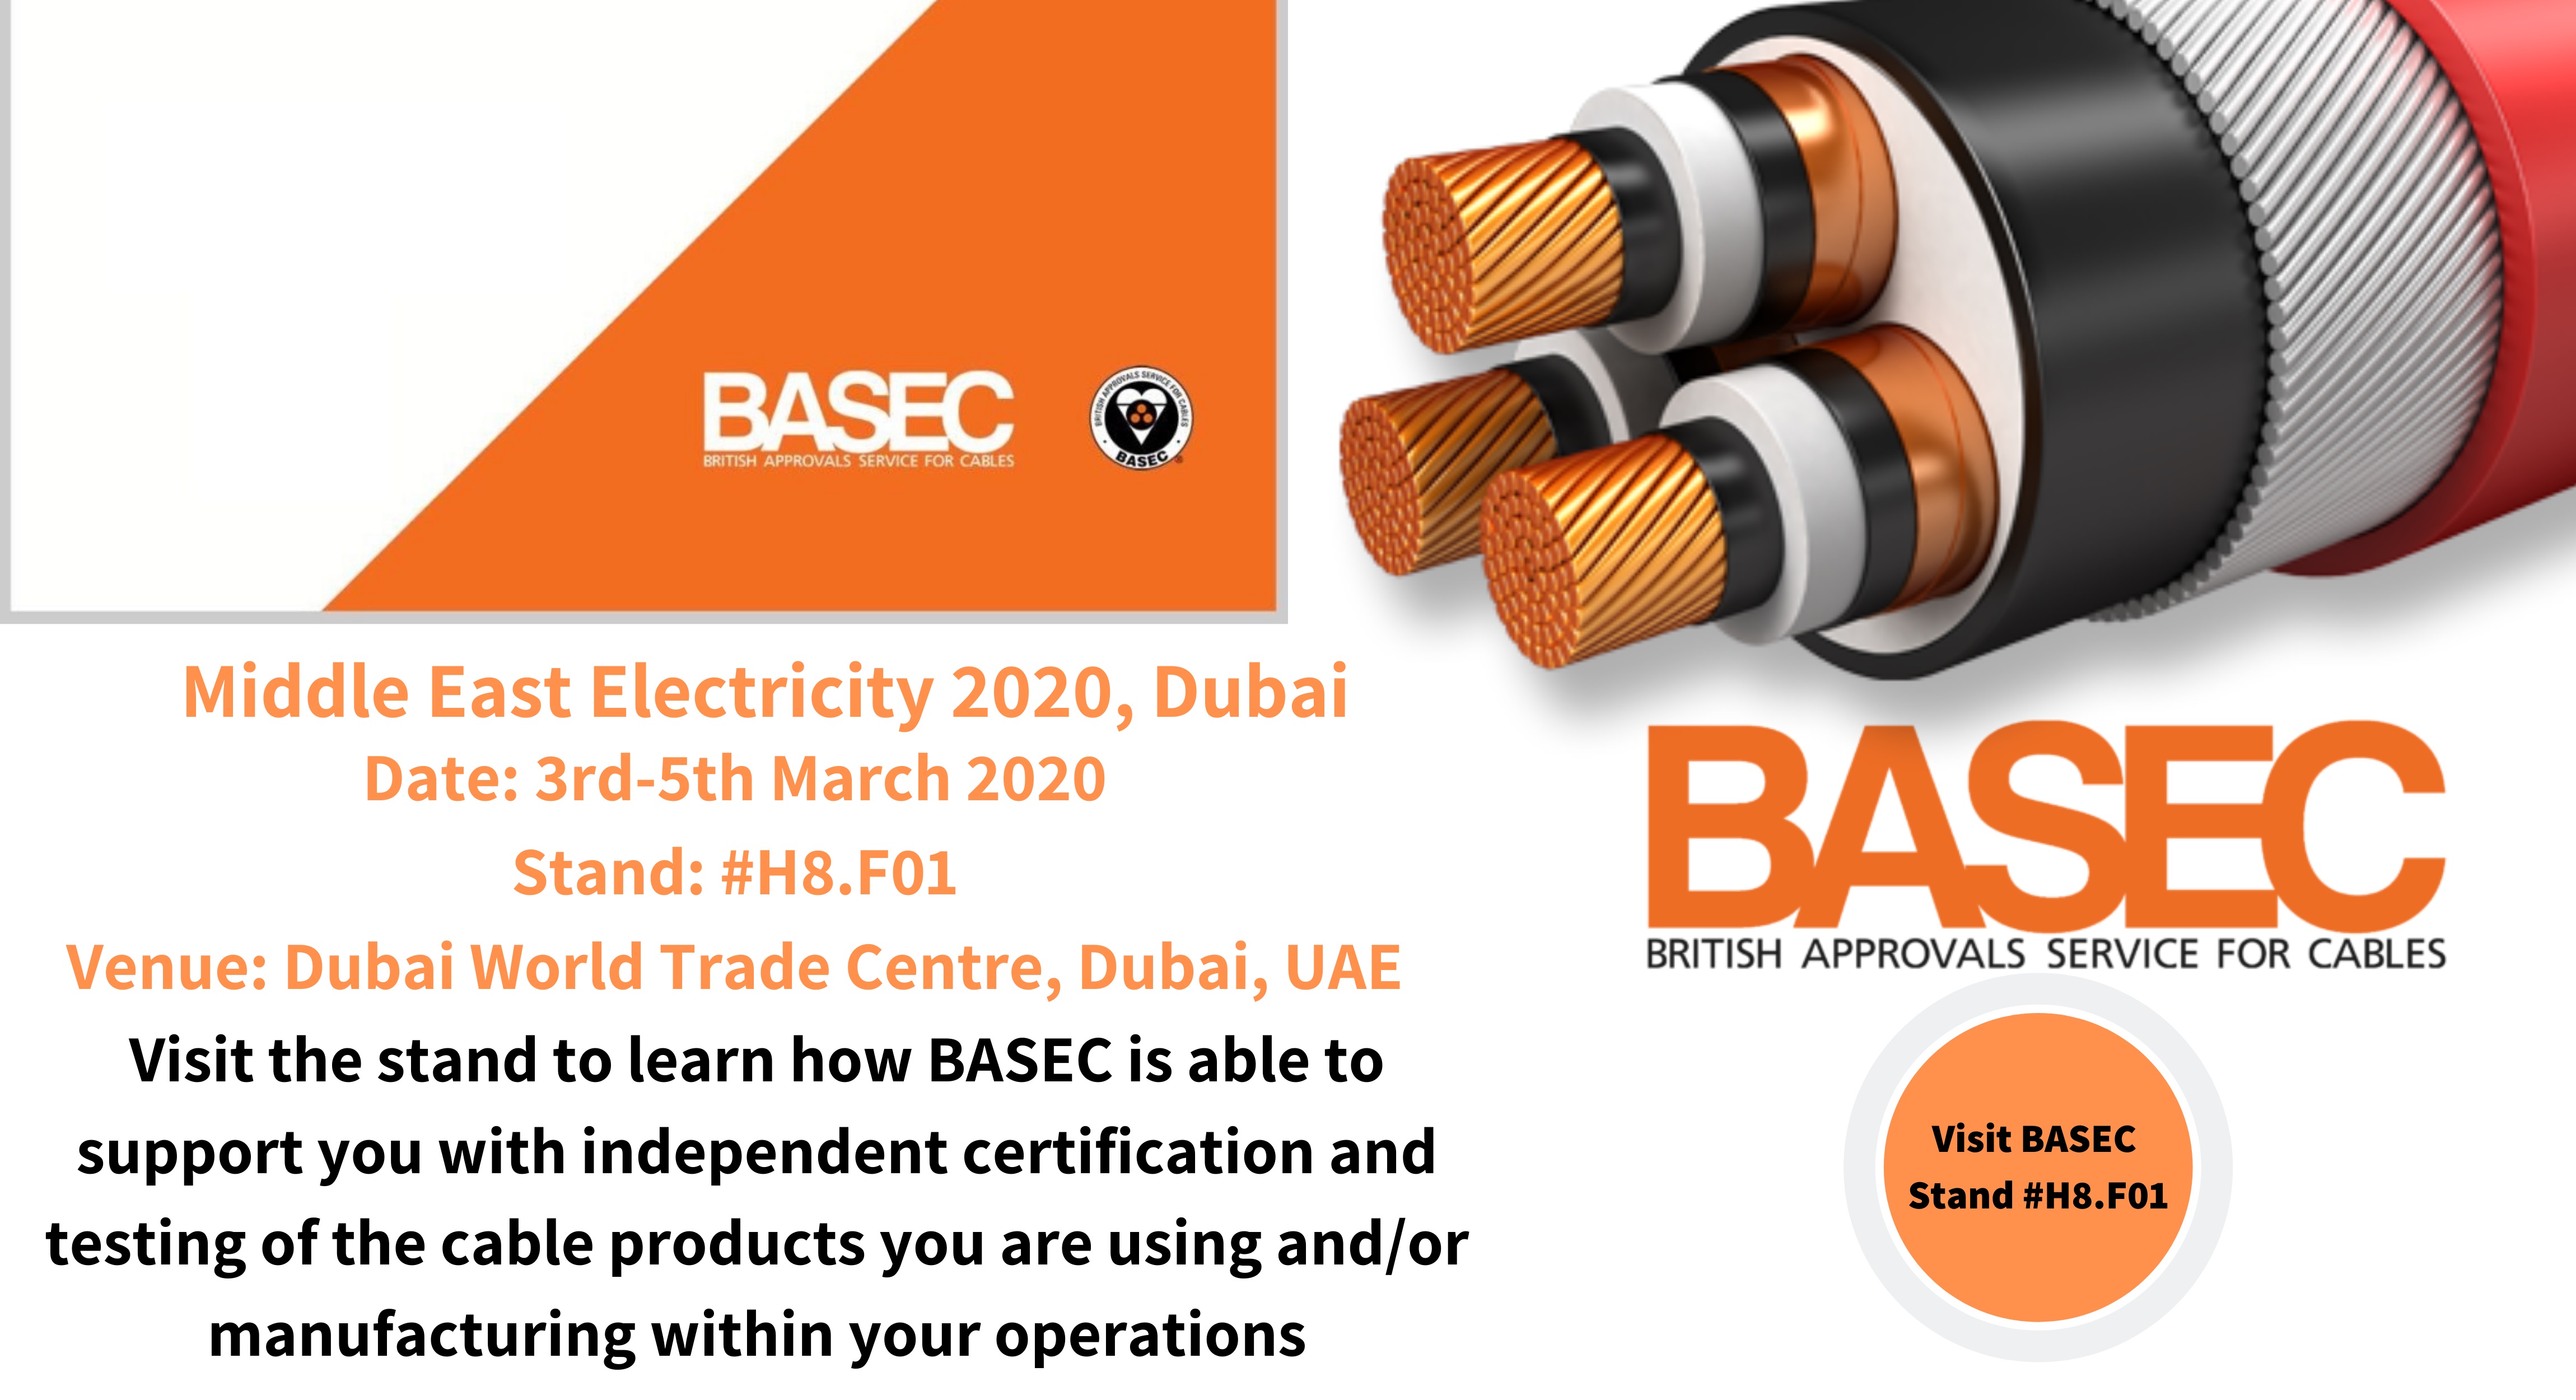 Middle East Electricity 2020, Dubai